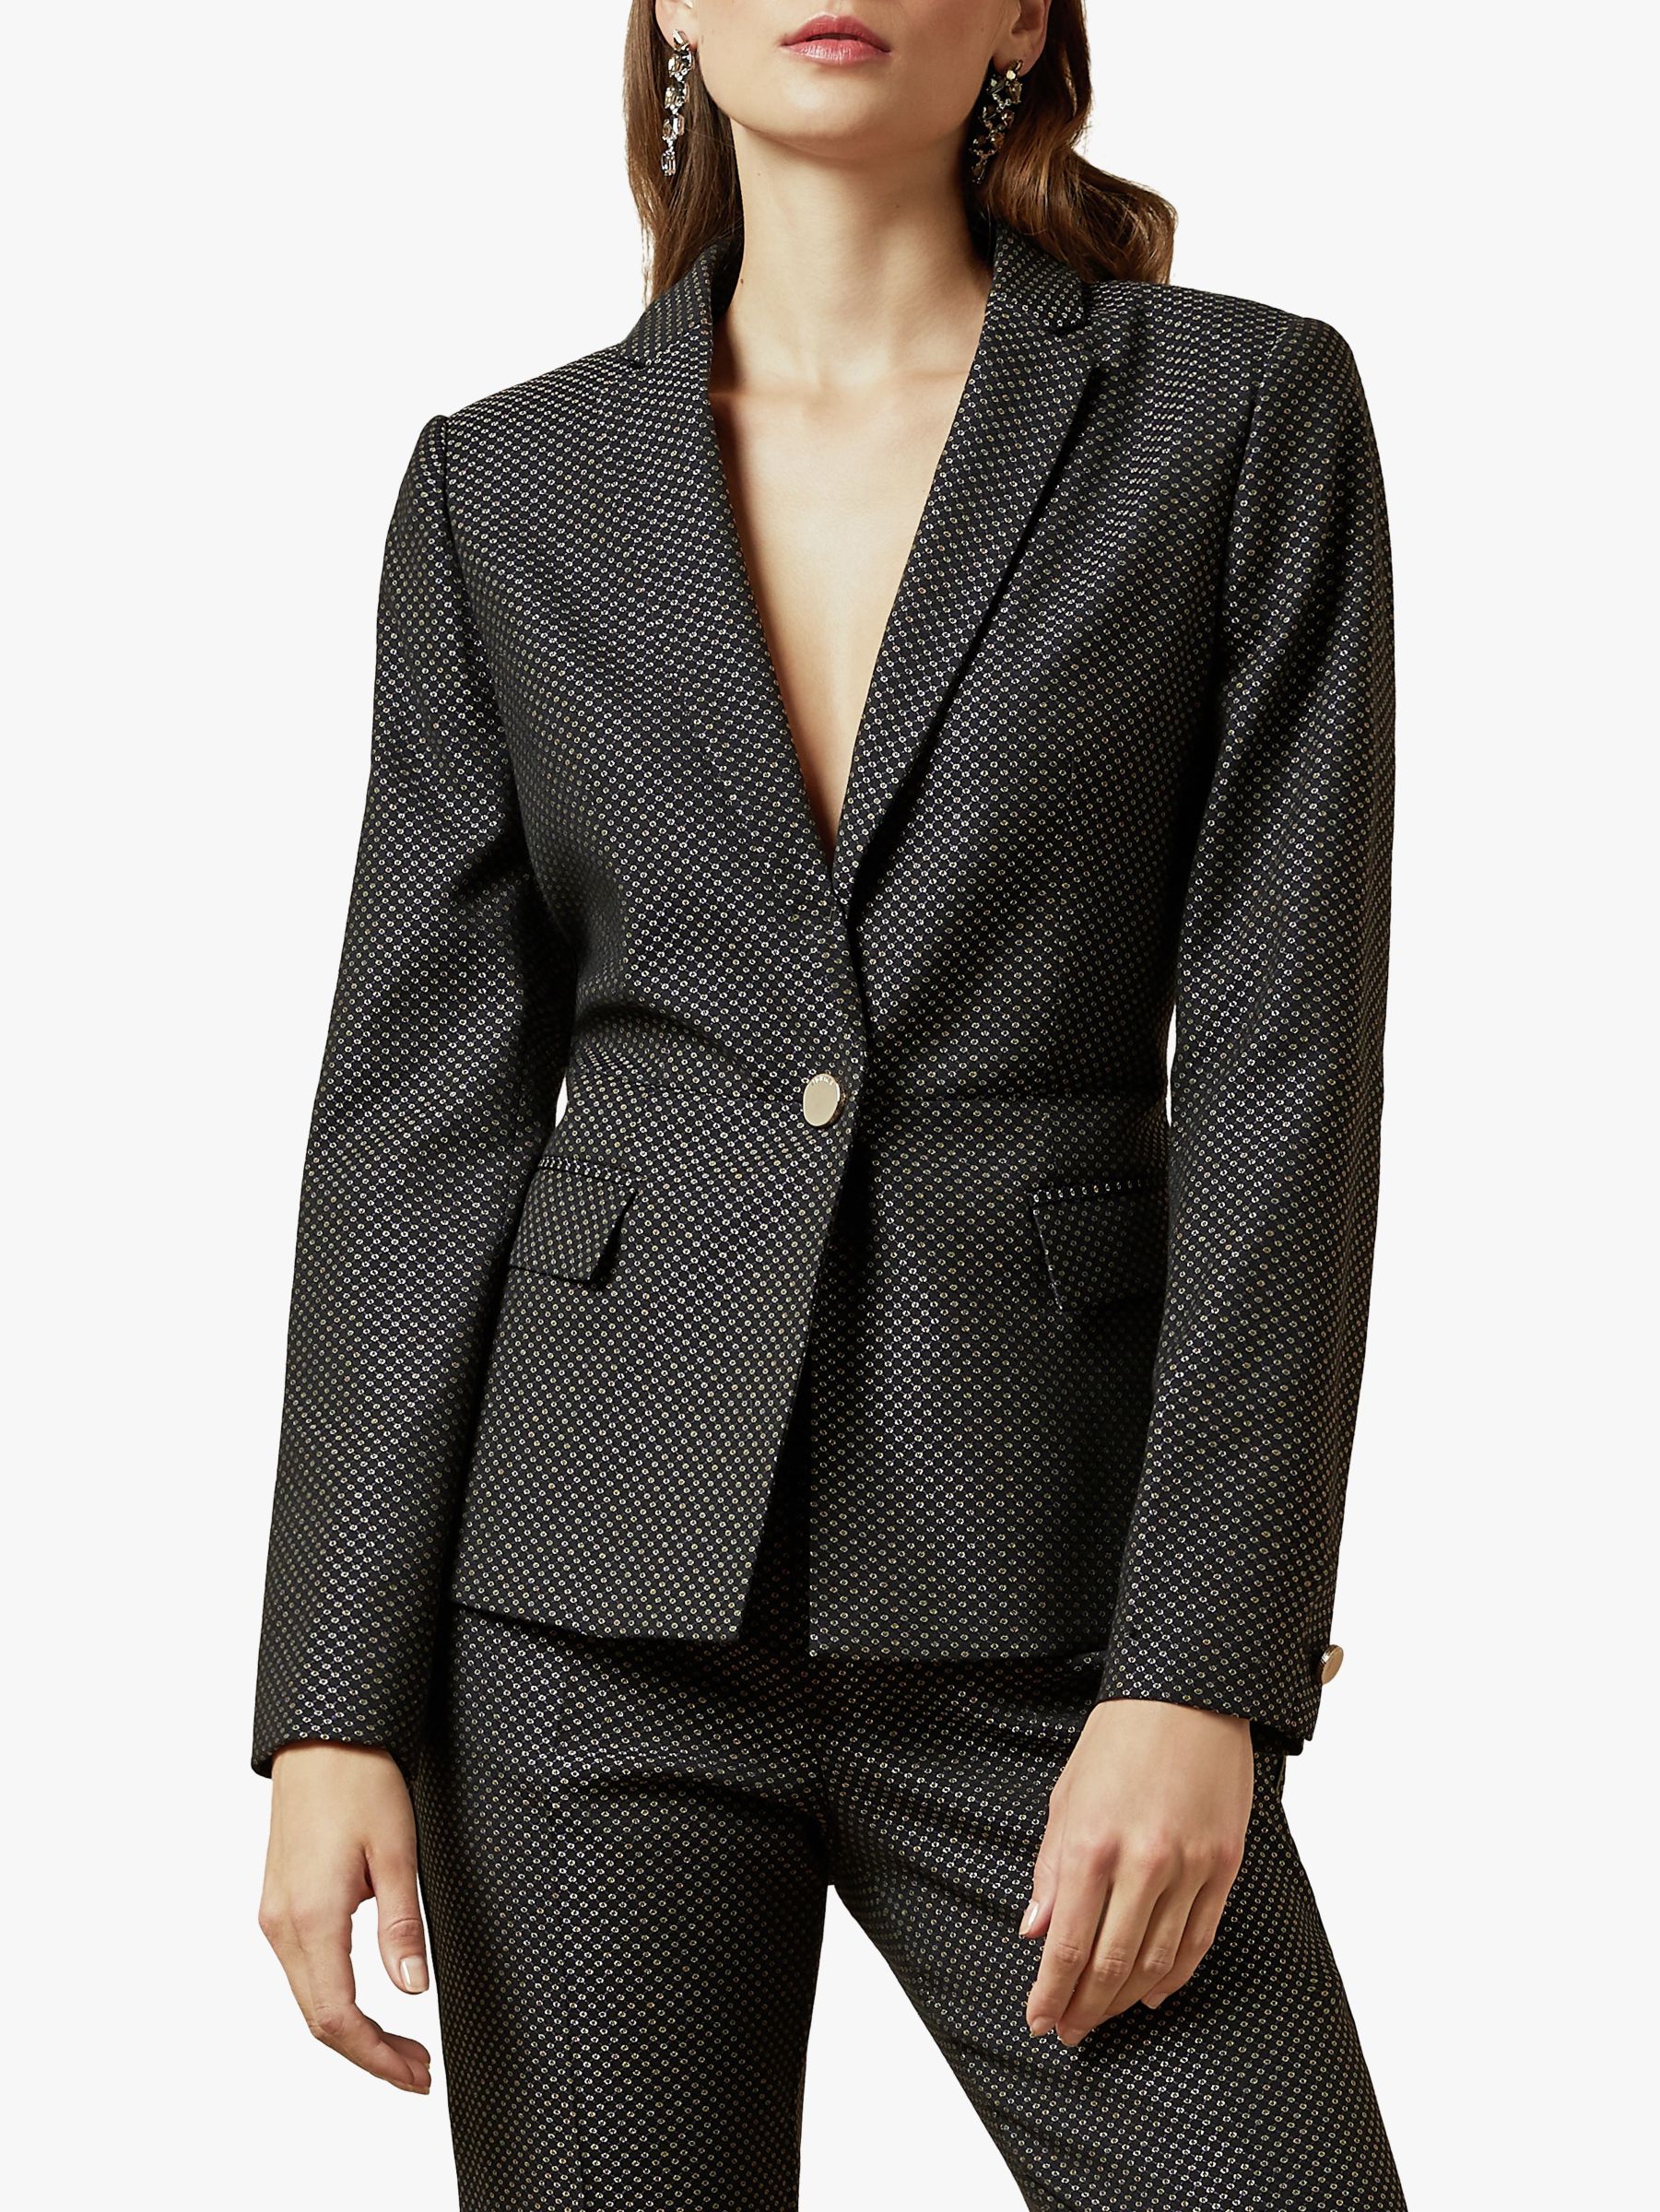 Ted Baker Neolaa Jacquard Suit Jacket, Black at John Lewis & Partners